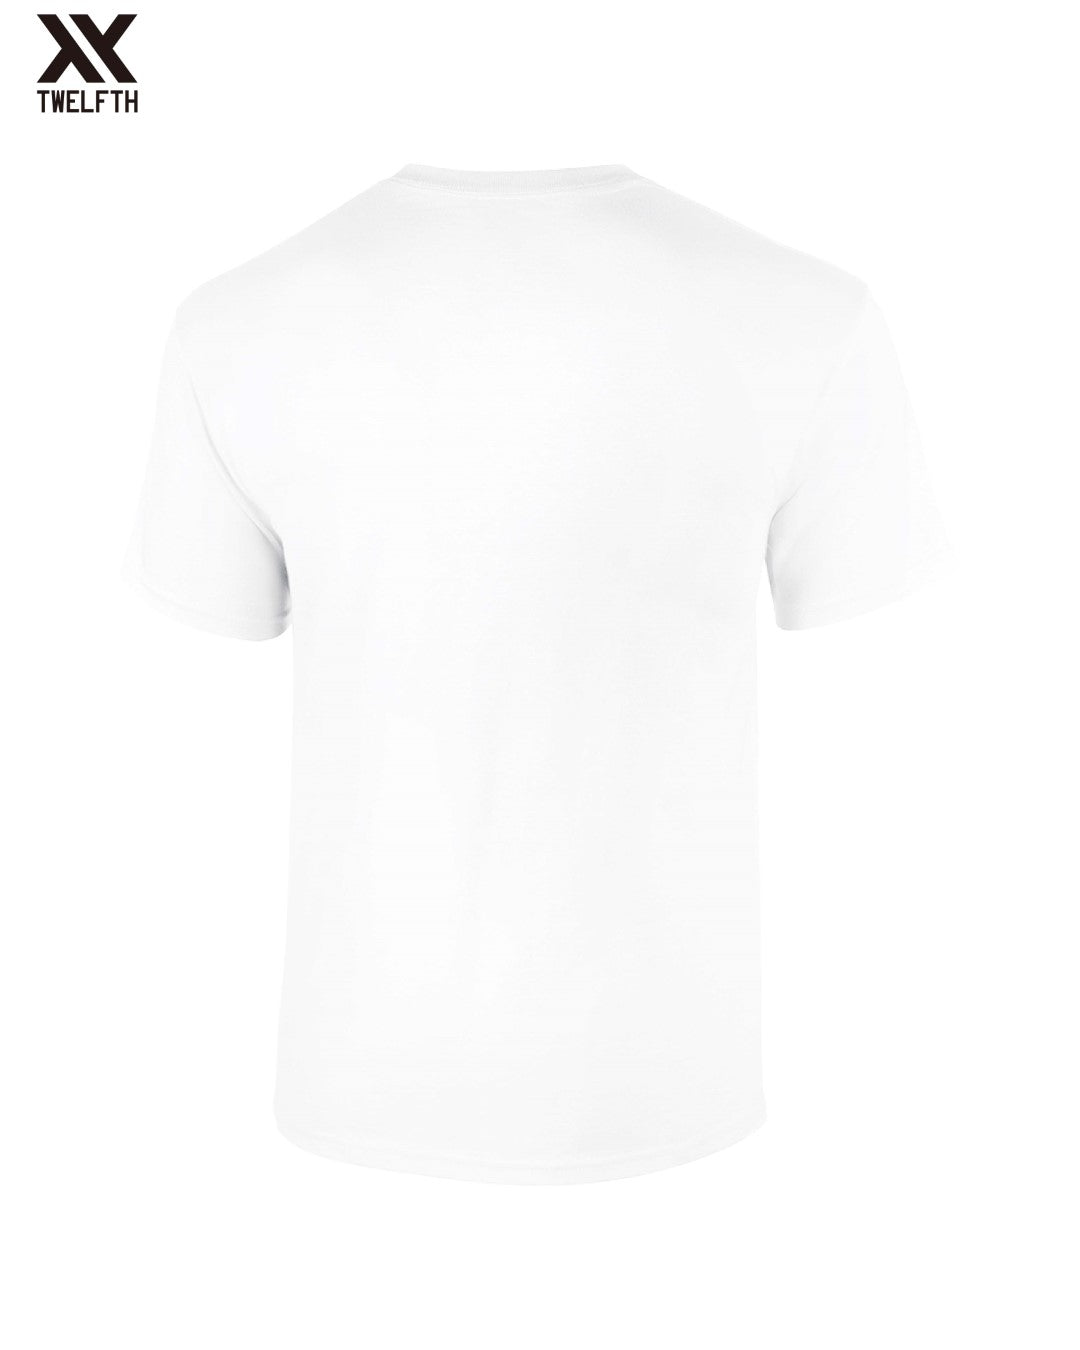 Peru Crest T-Shirt - Mens